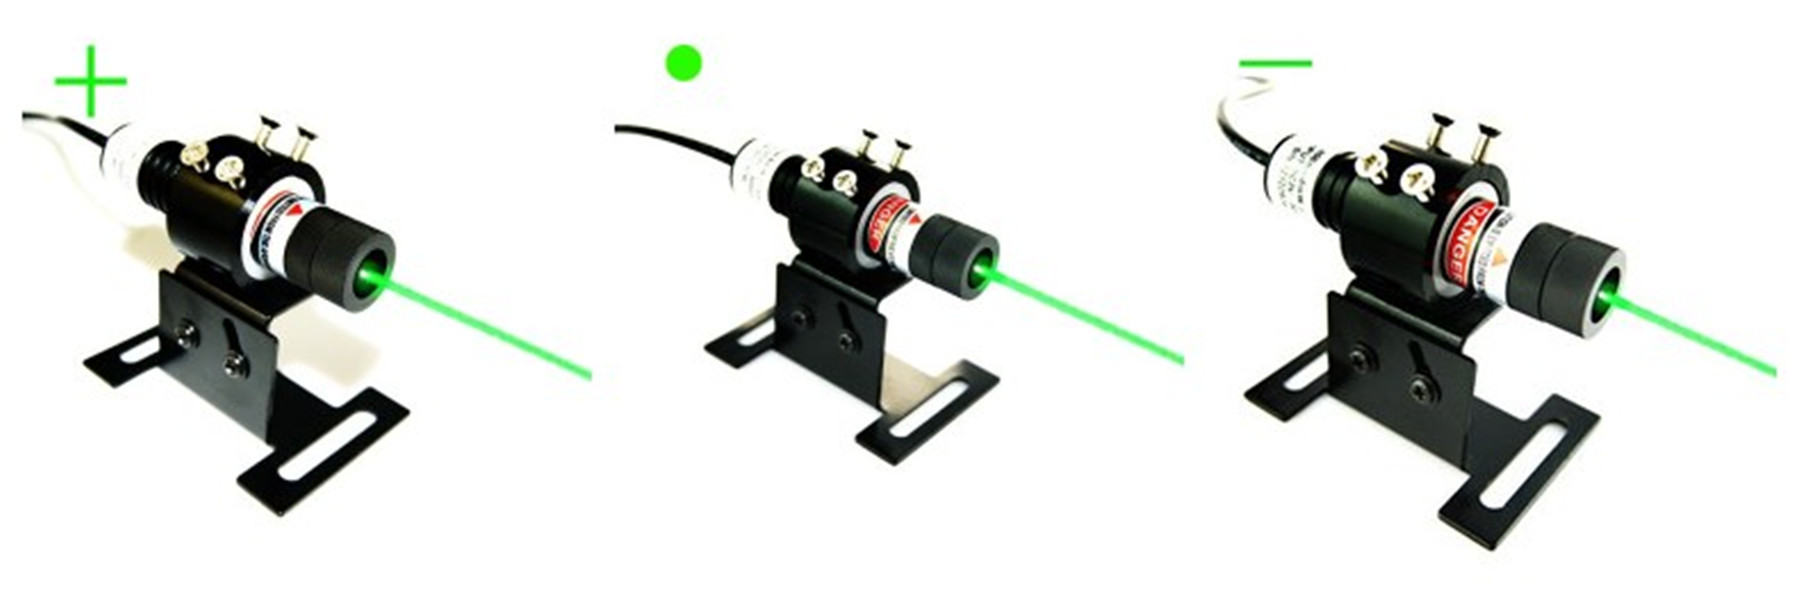 Alignement laser industriels